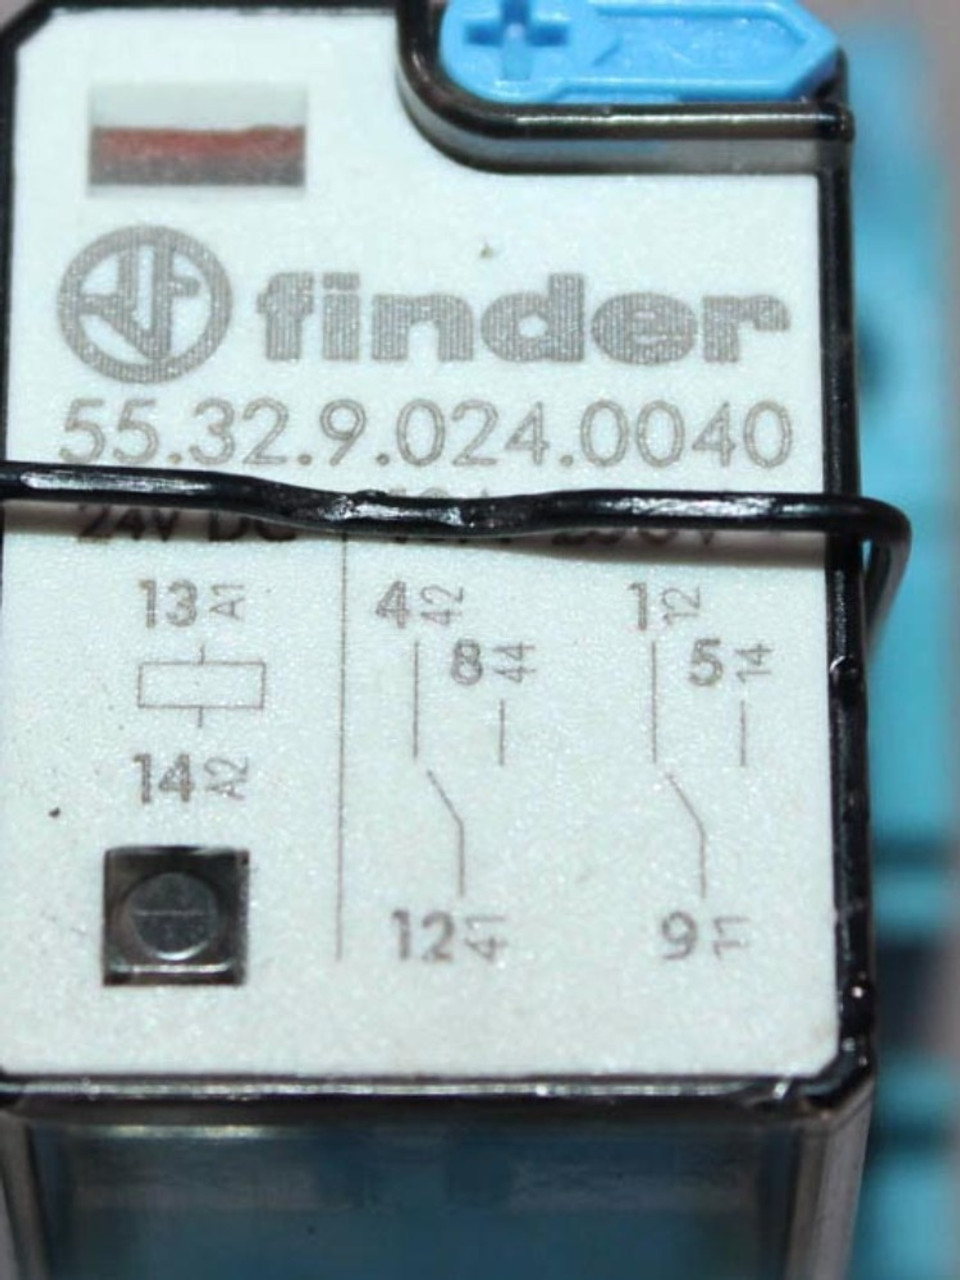 Finder 94.72 DIN Rail/Panel Socket w/Finder 54.32.9.024.0040 General Purpose Relay